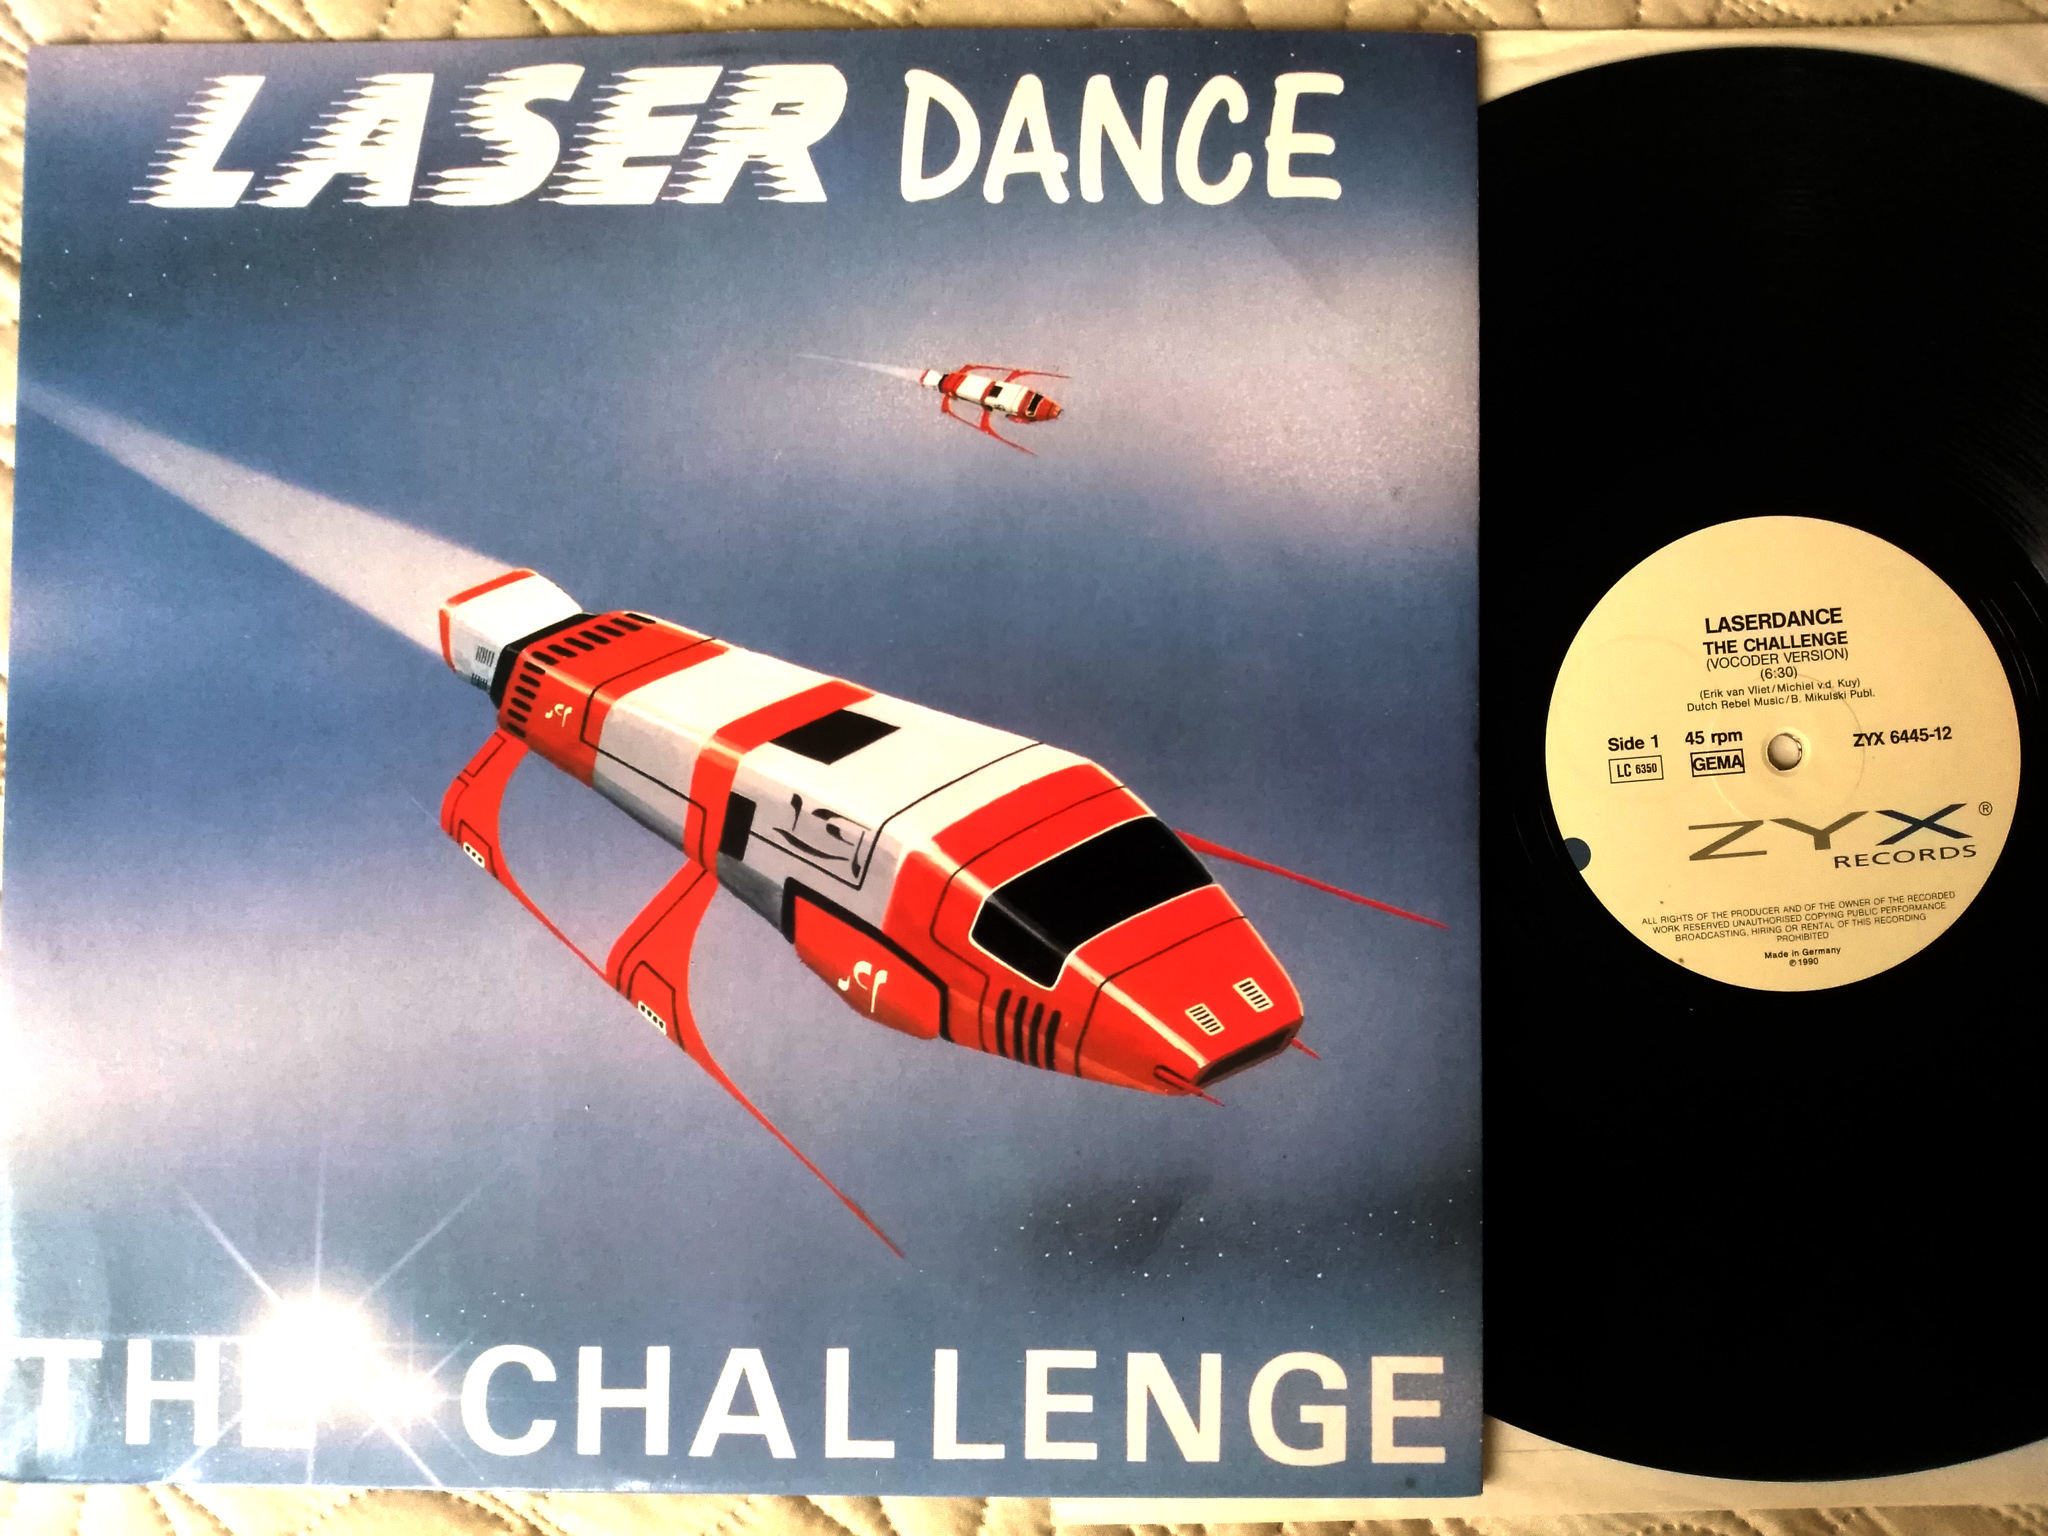 Laser Dance - The Challenge